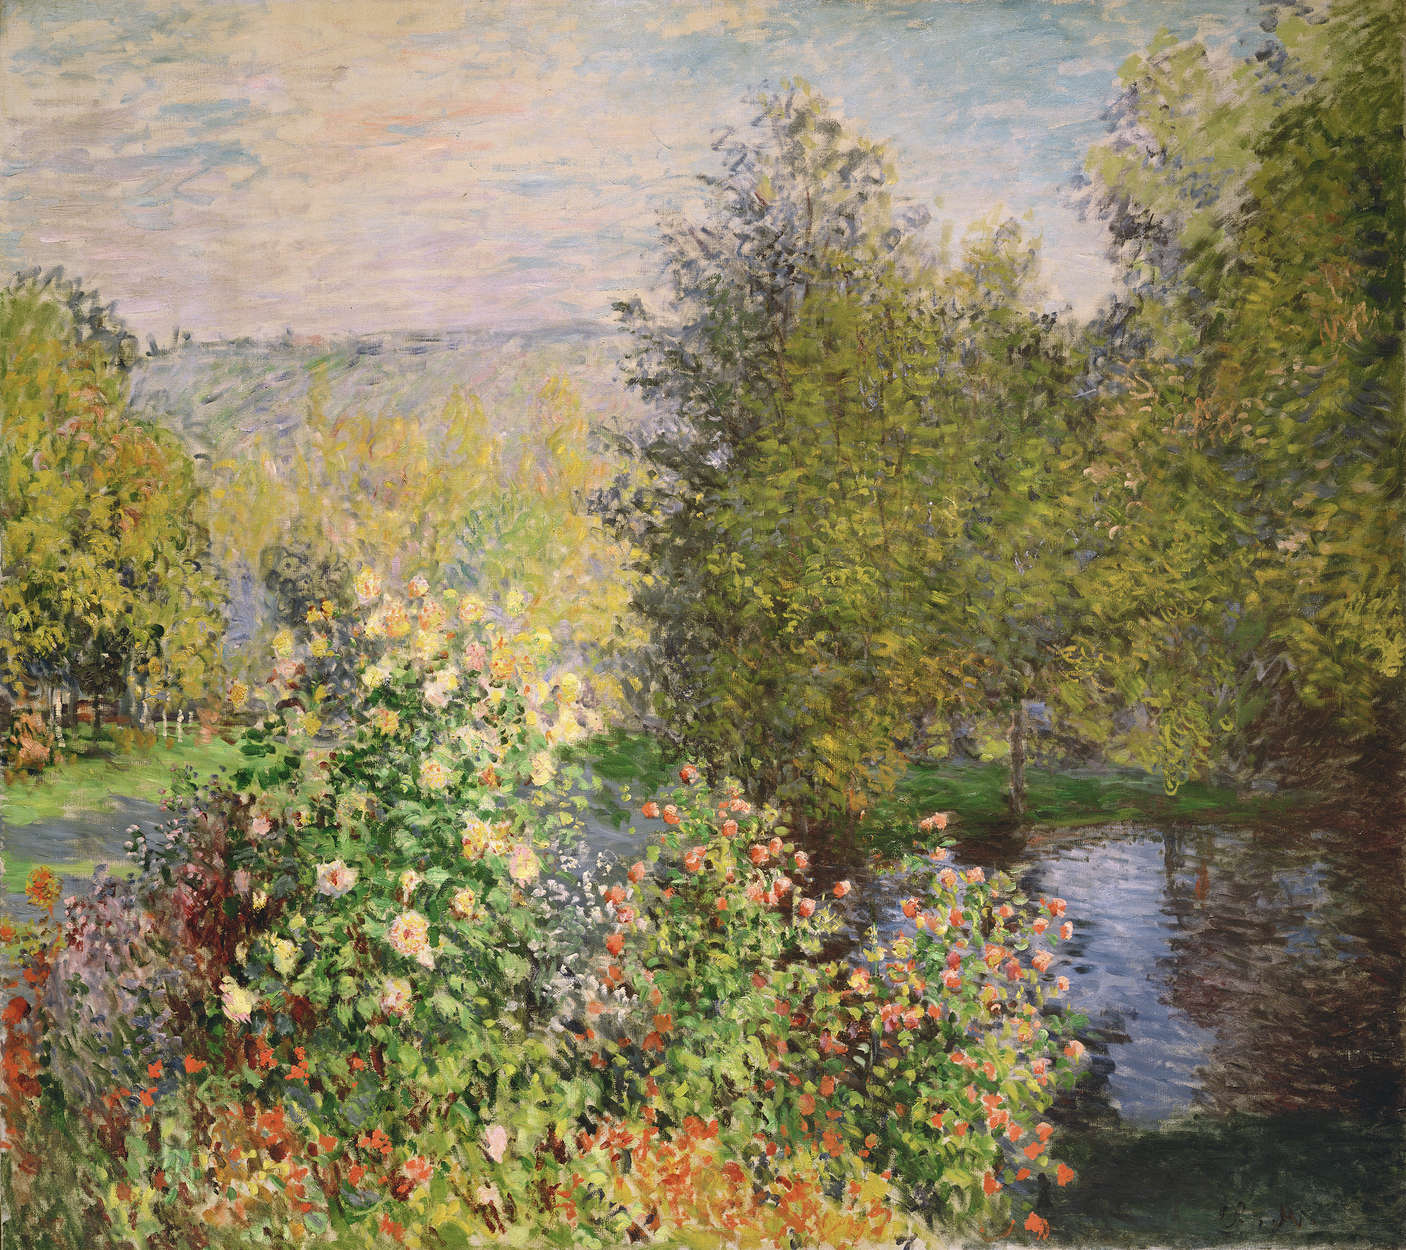             Photo wallpaper "A corner of the garden in Montgeron" by Claude Monet
        